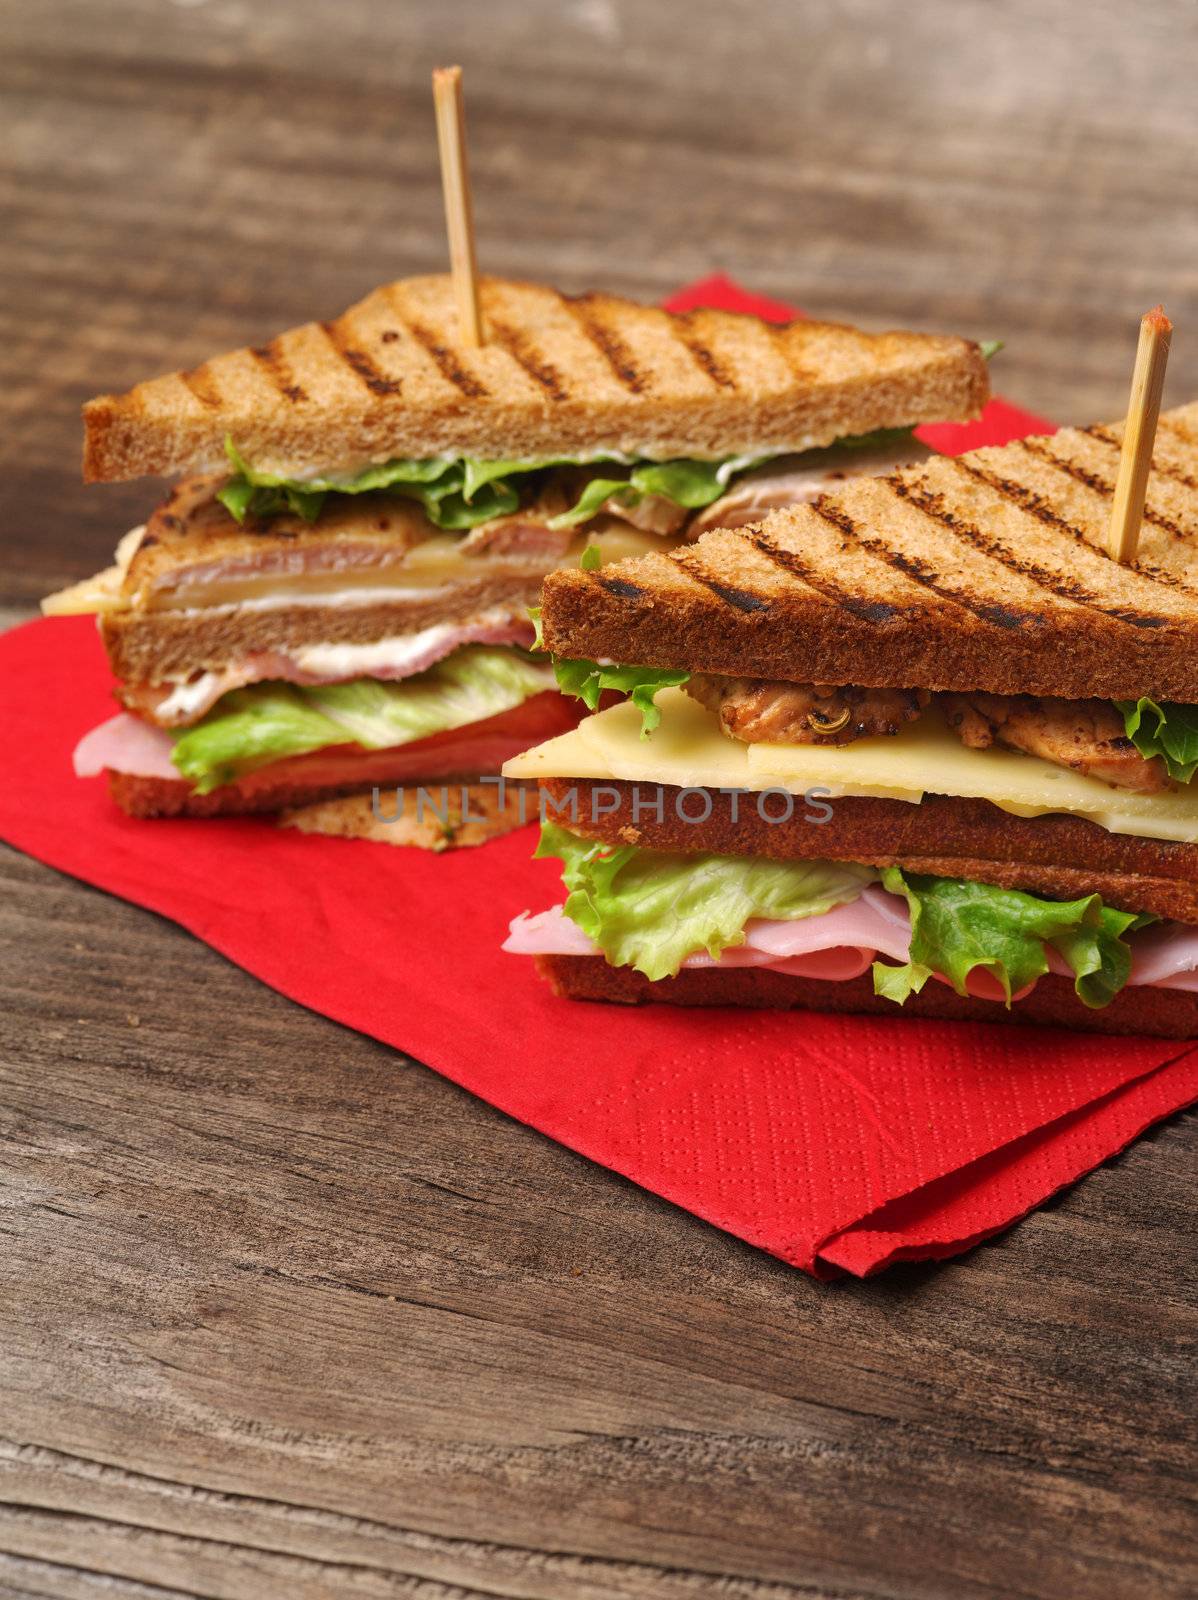 Club sandwich on napkin by sumners